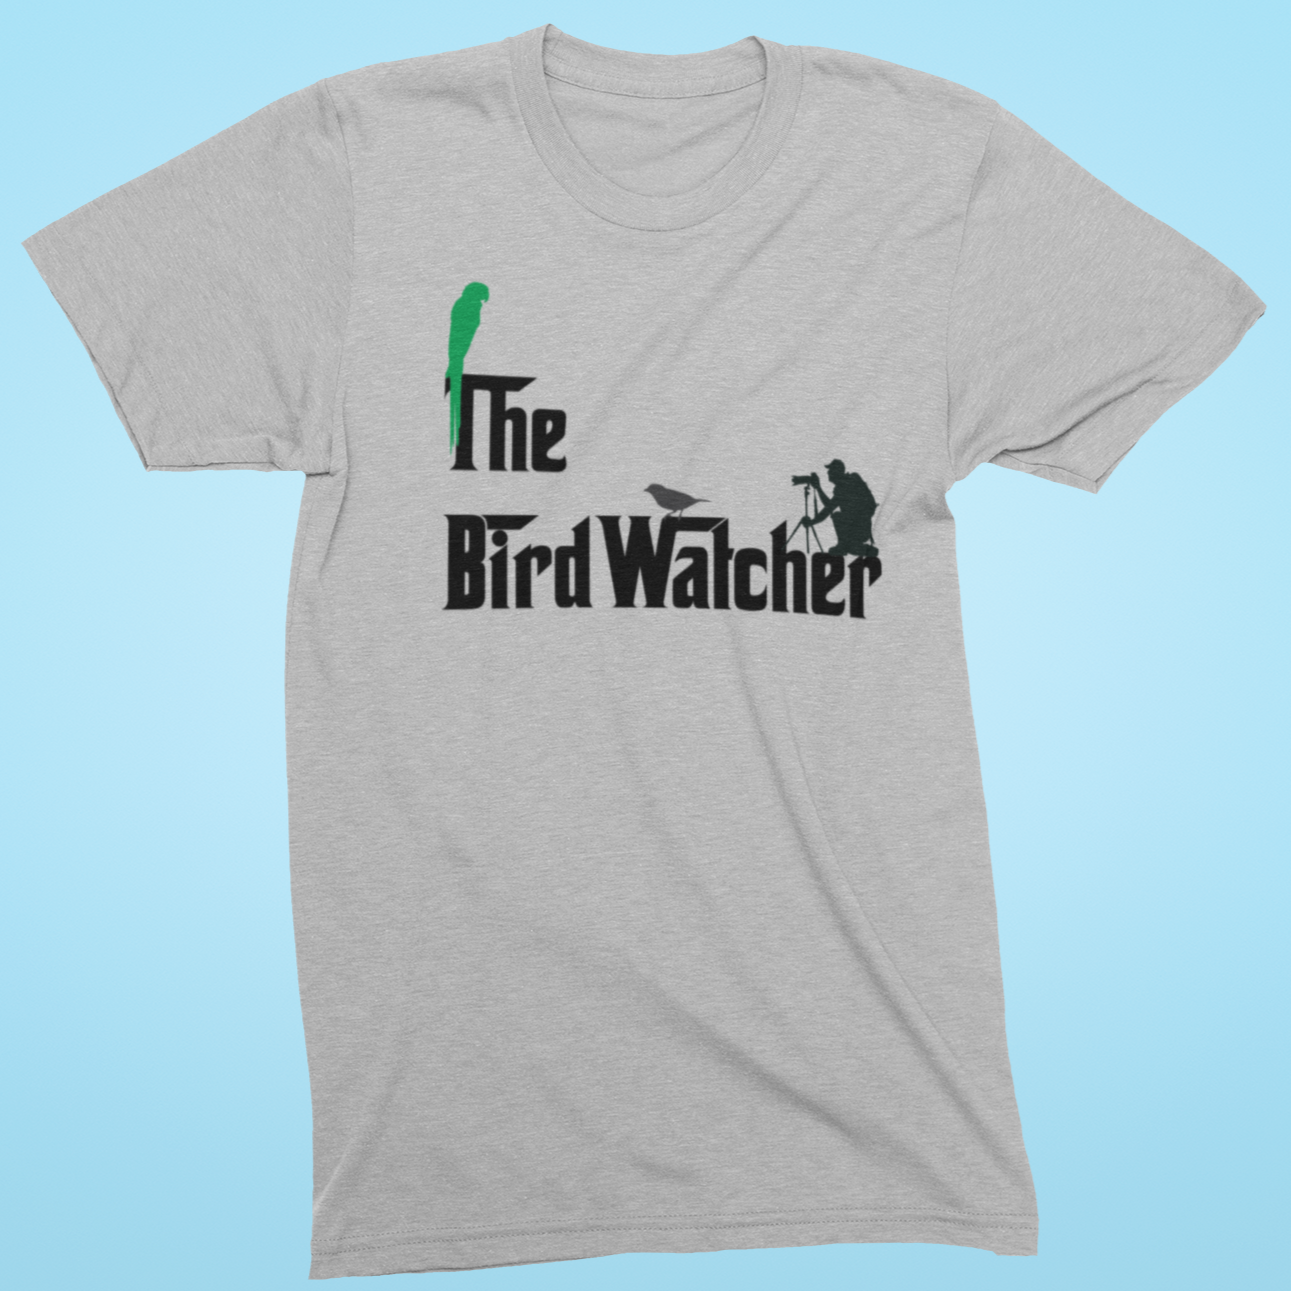 The Bird Watcher